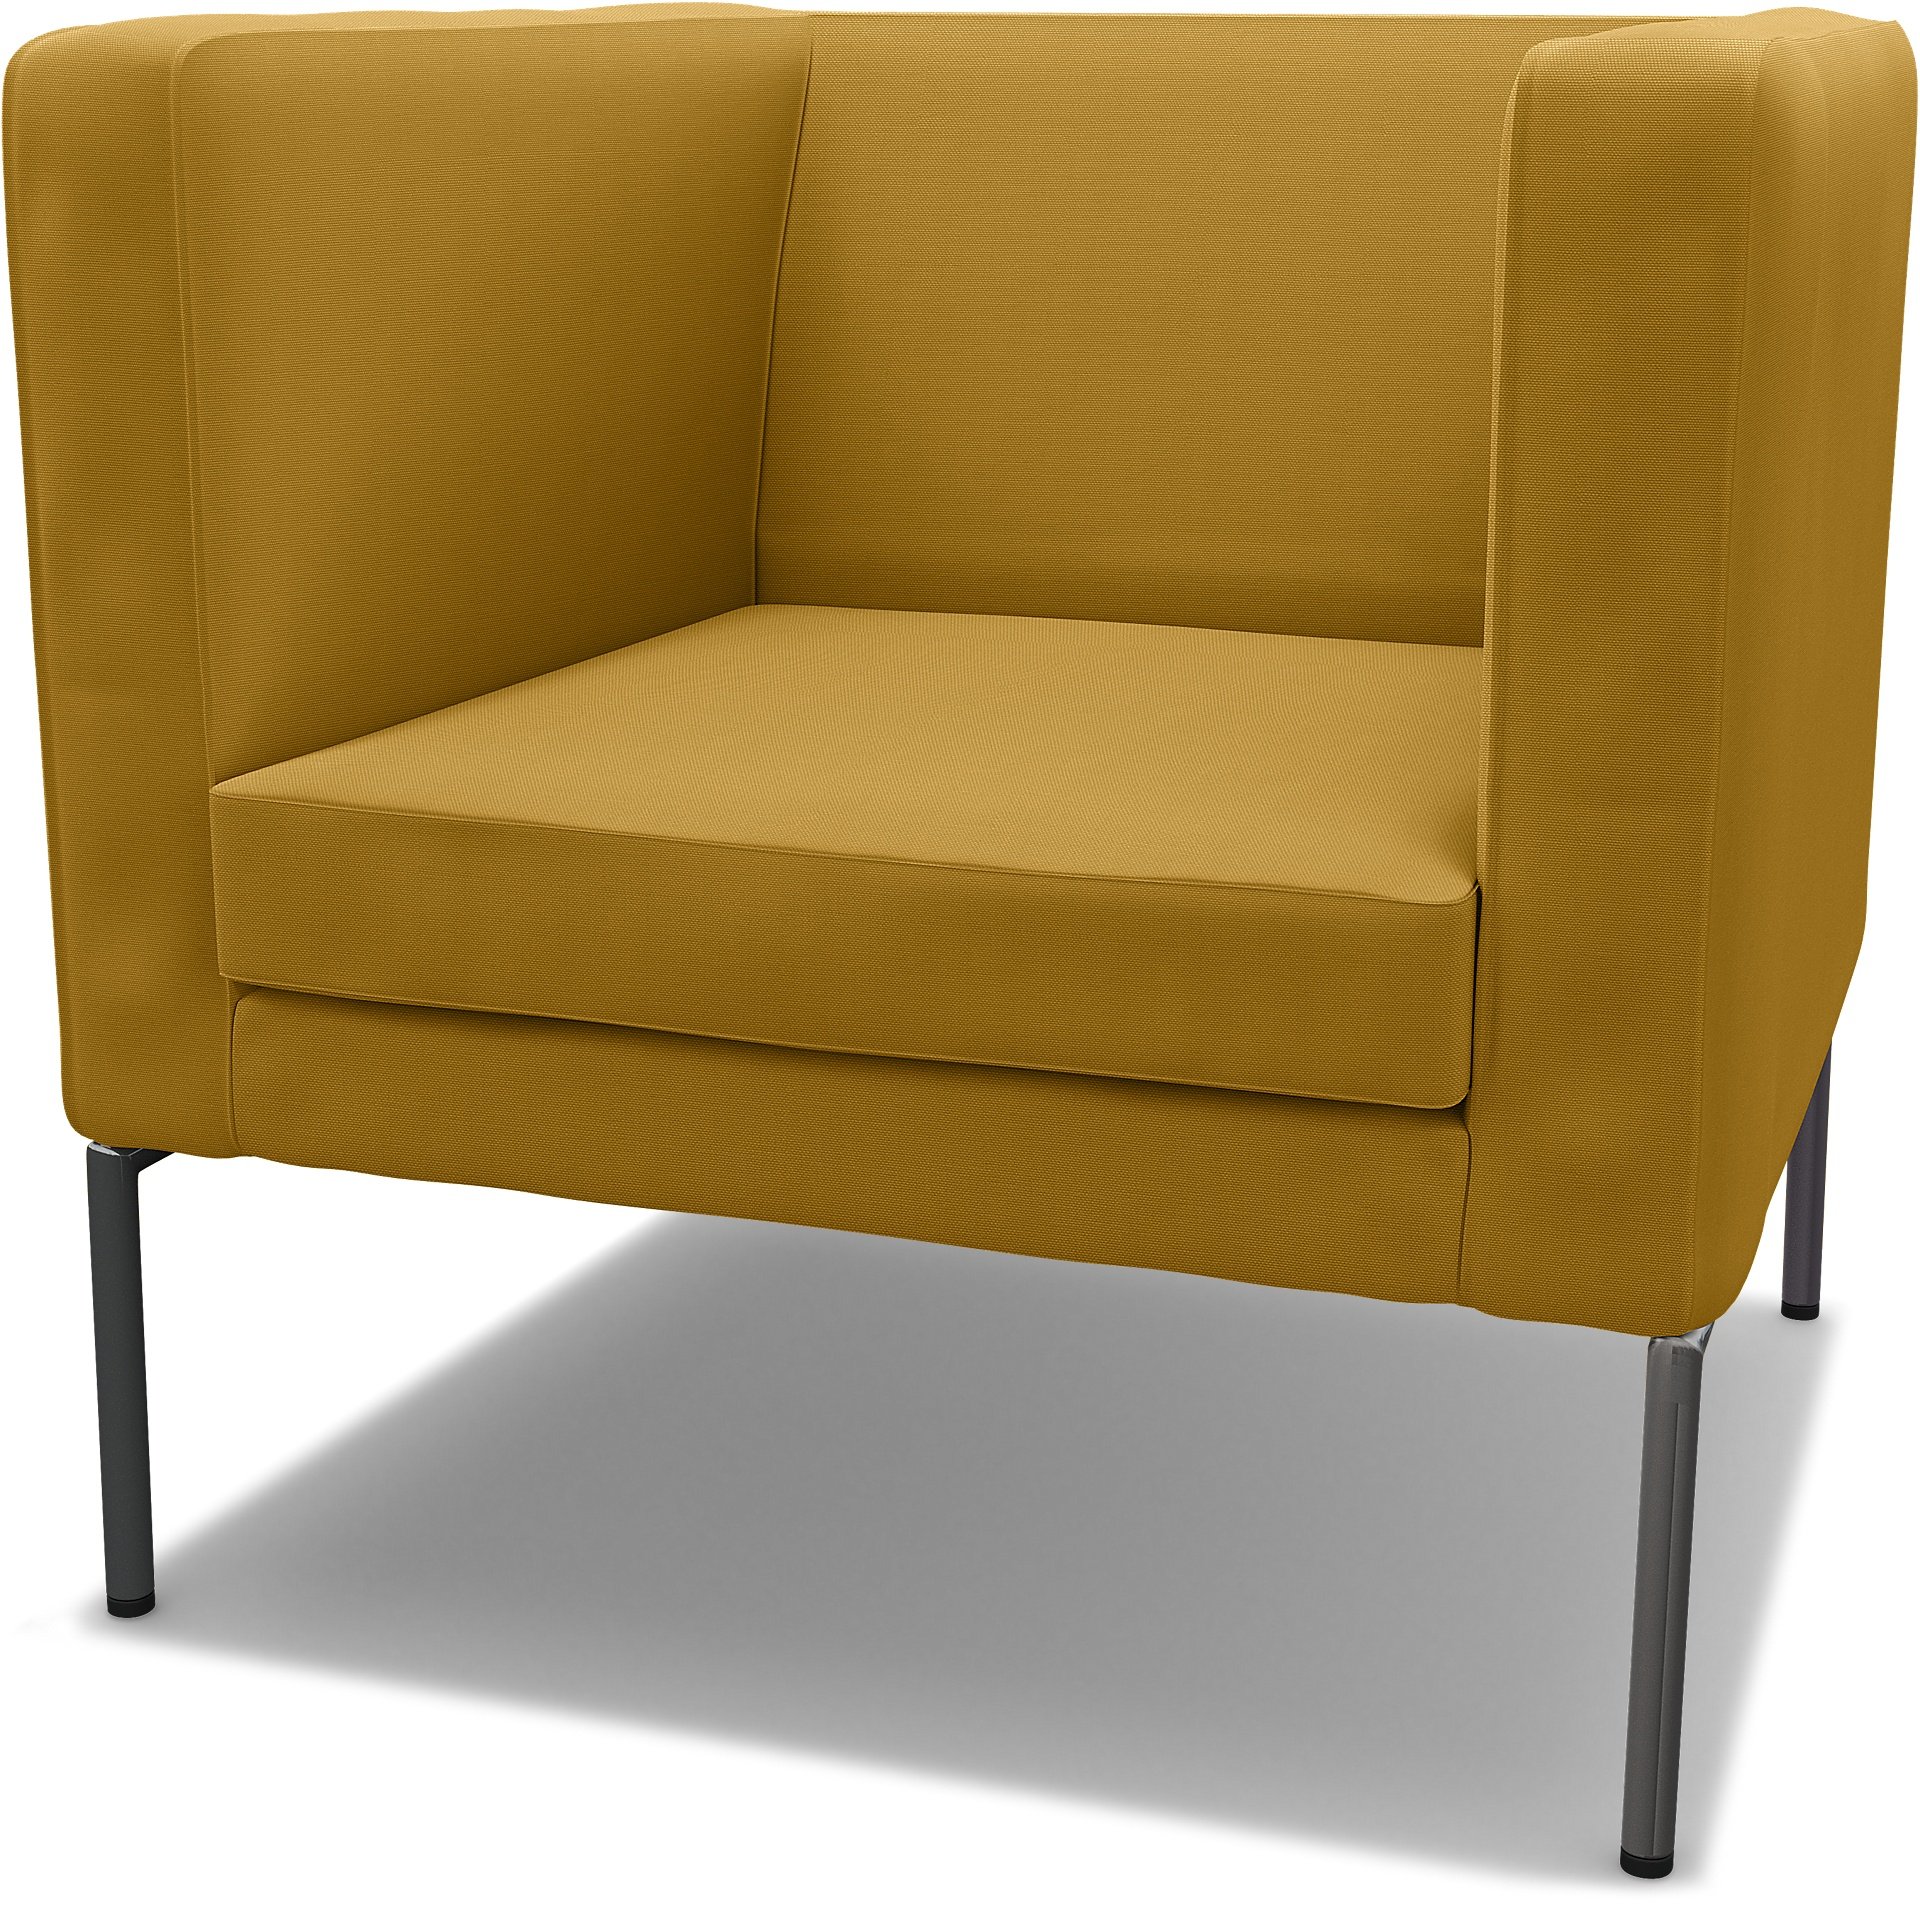 IKEA - Klappsta Armchair Cover, Honey Mustard, Cotton - Bemz